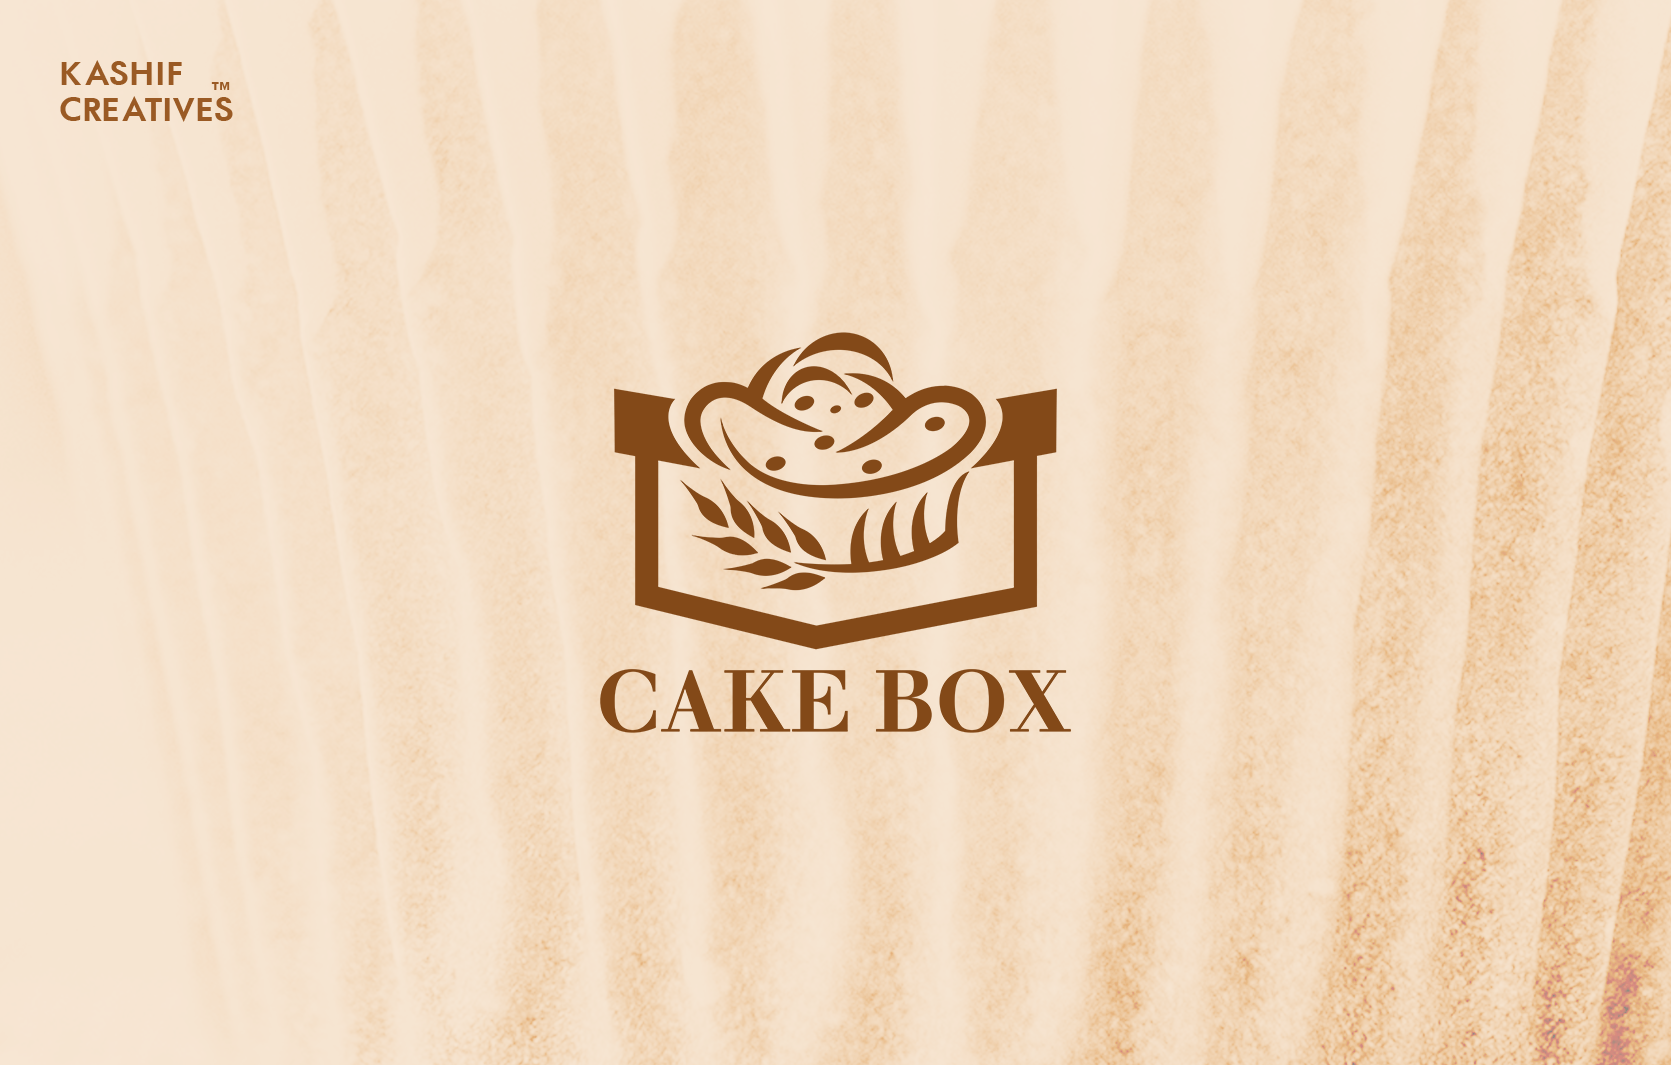 Cake Box Goodmayes, 20 Goodmayes Rd in London - Restaurant menu and reviews